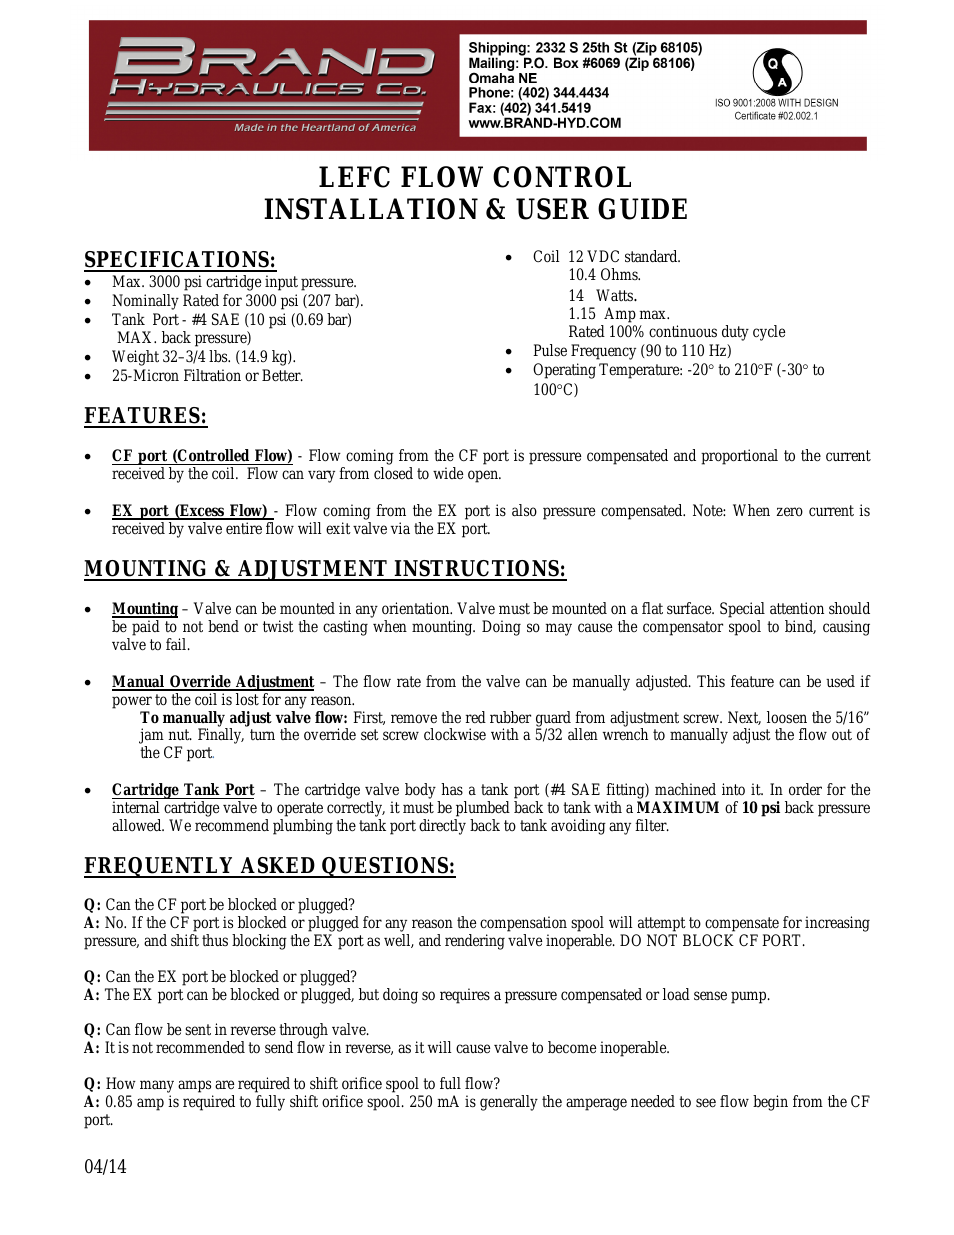 LEFC FLOW CONTROL